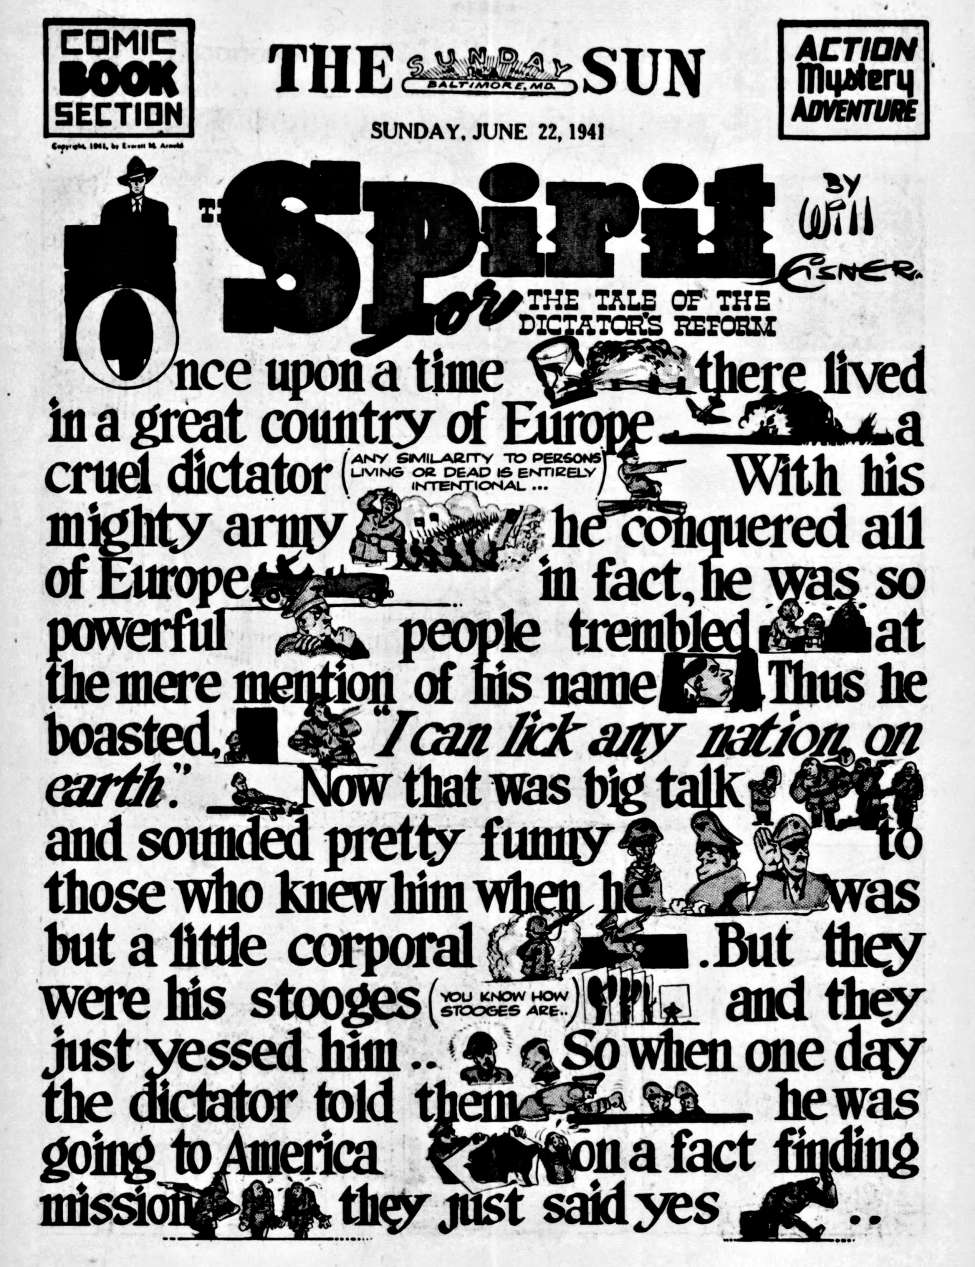 Comic Book Cover For The Spirit (1941-06-22) - Baltimore Sun (b/w)